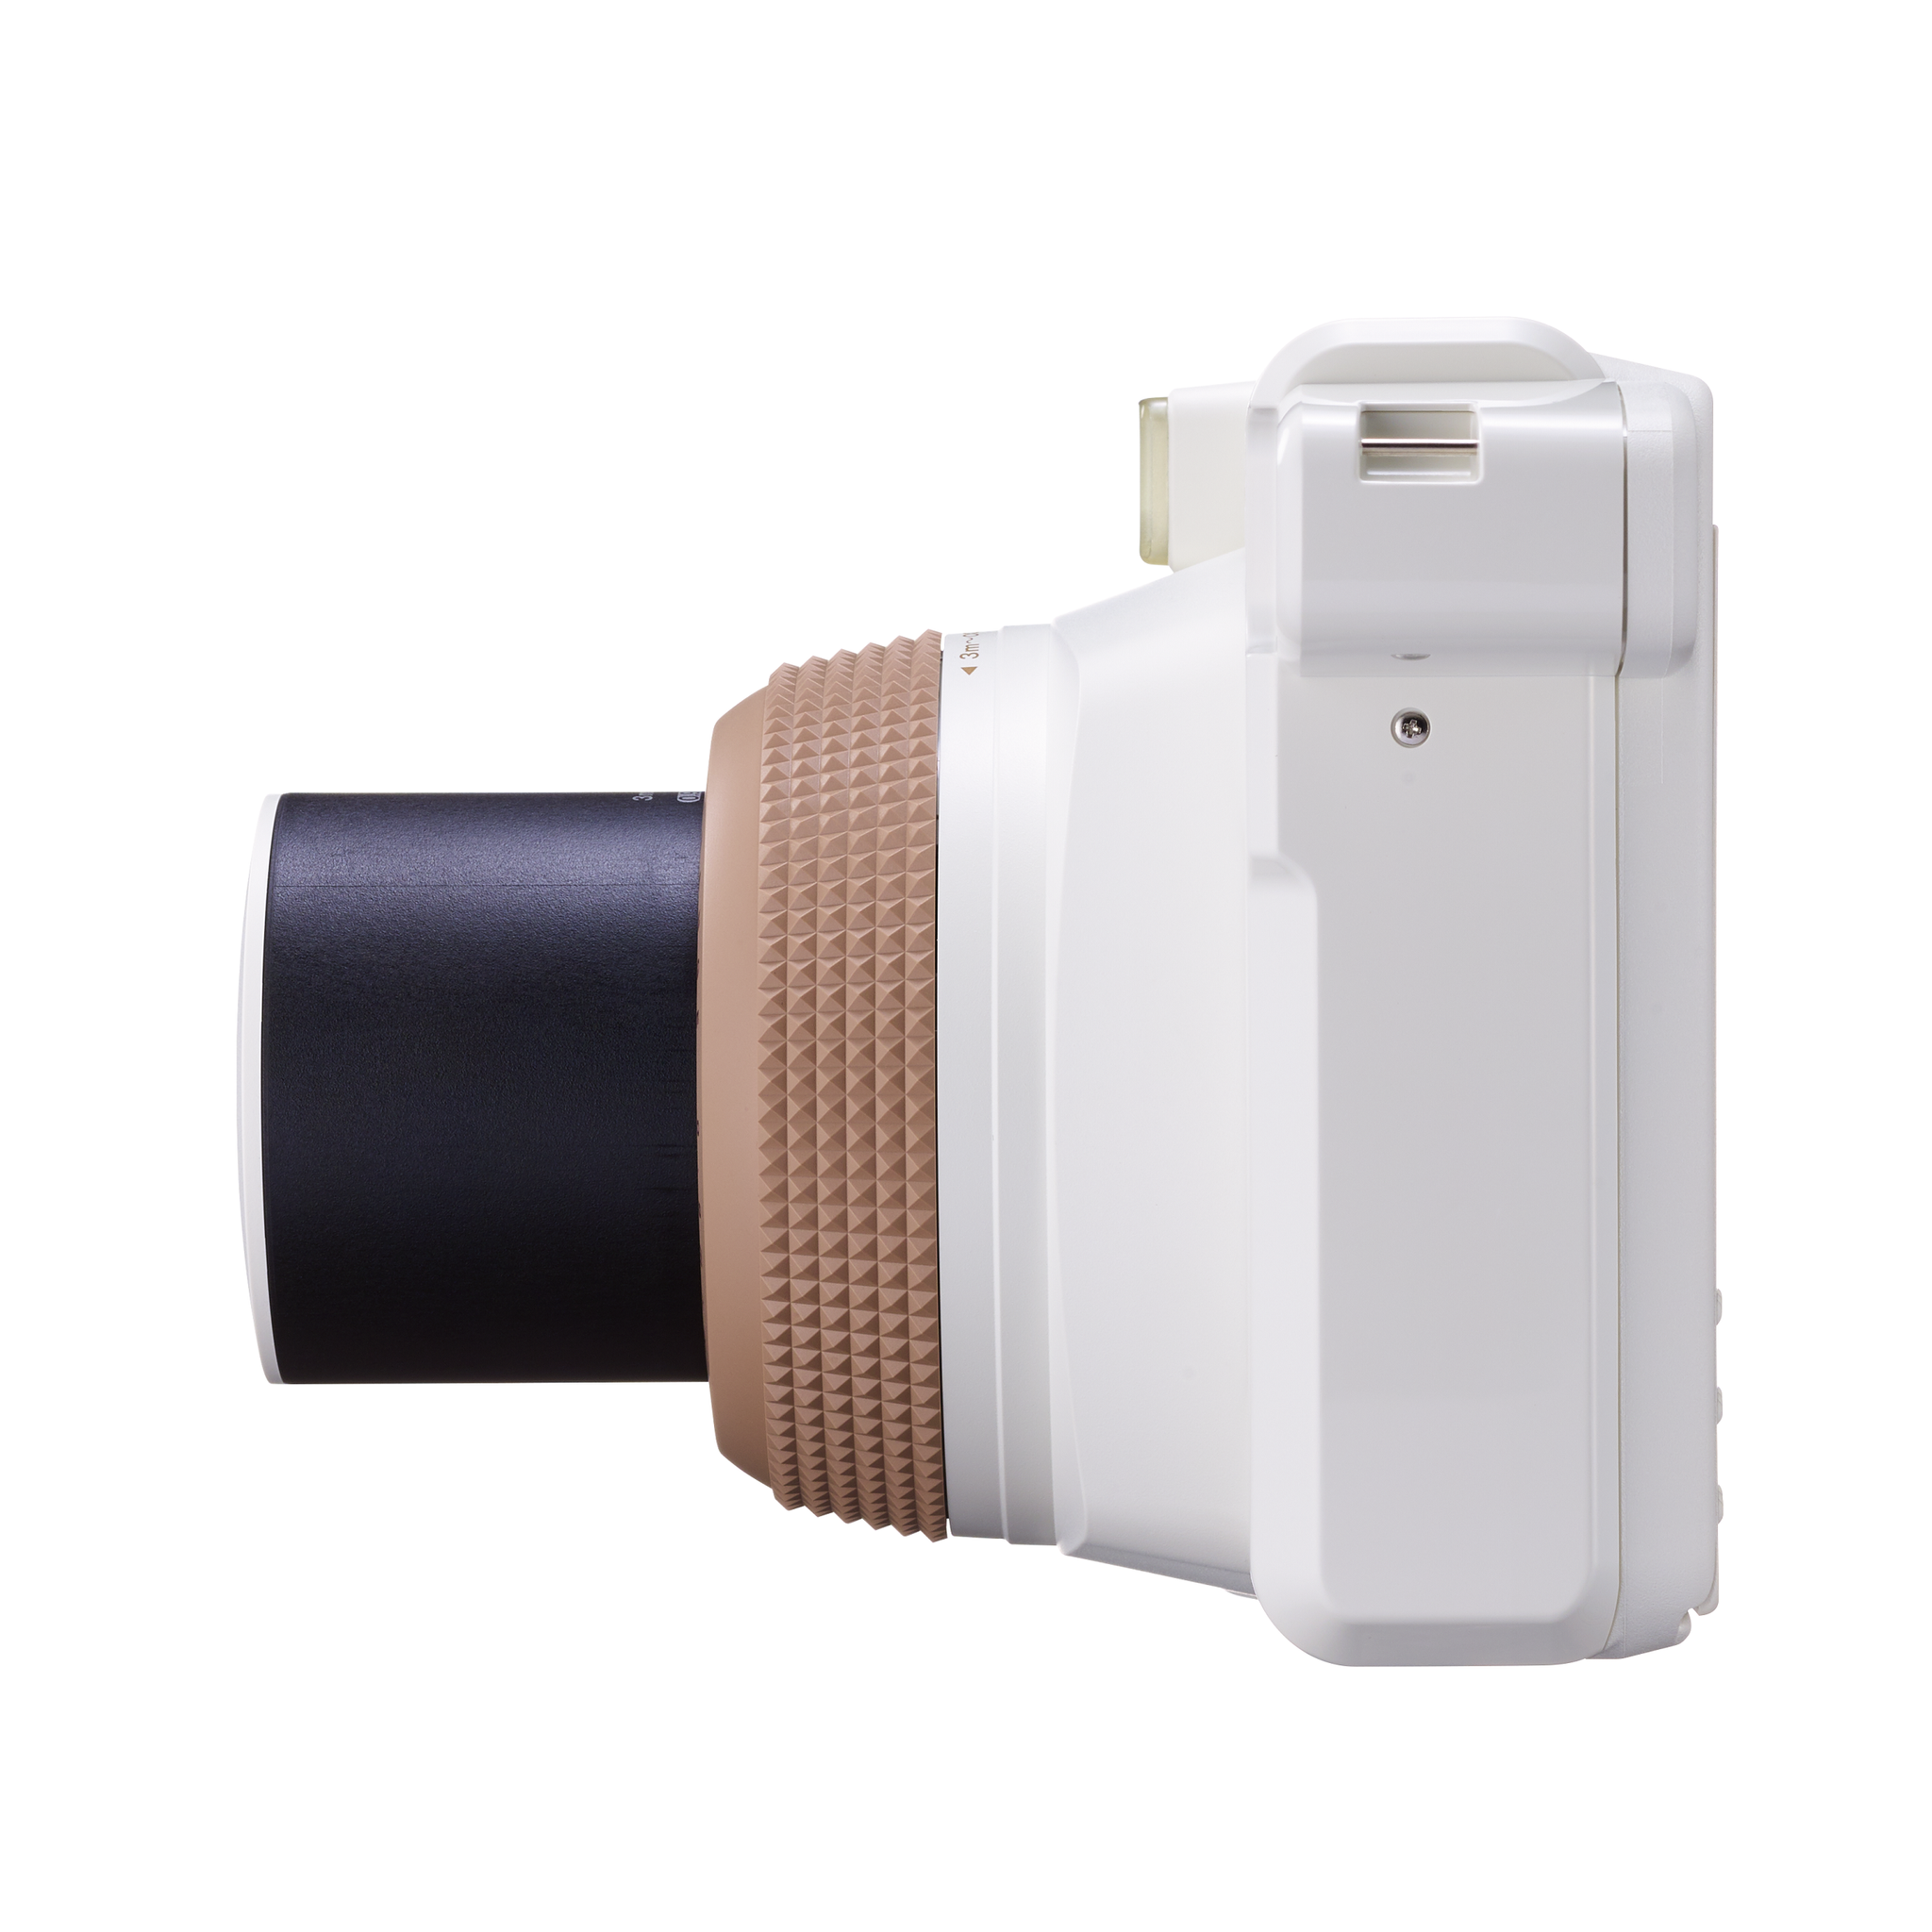 Fujiflm instax wide 300 instant film camera (Toffee)